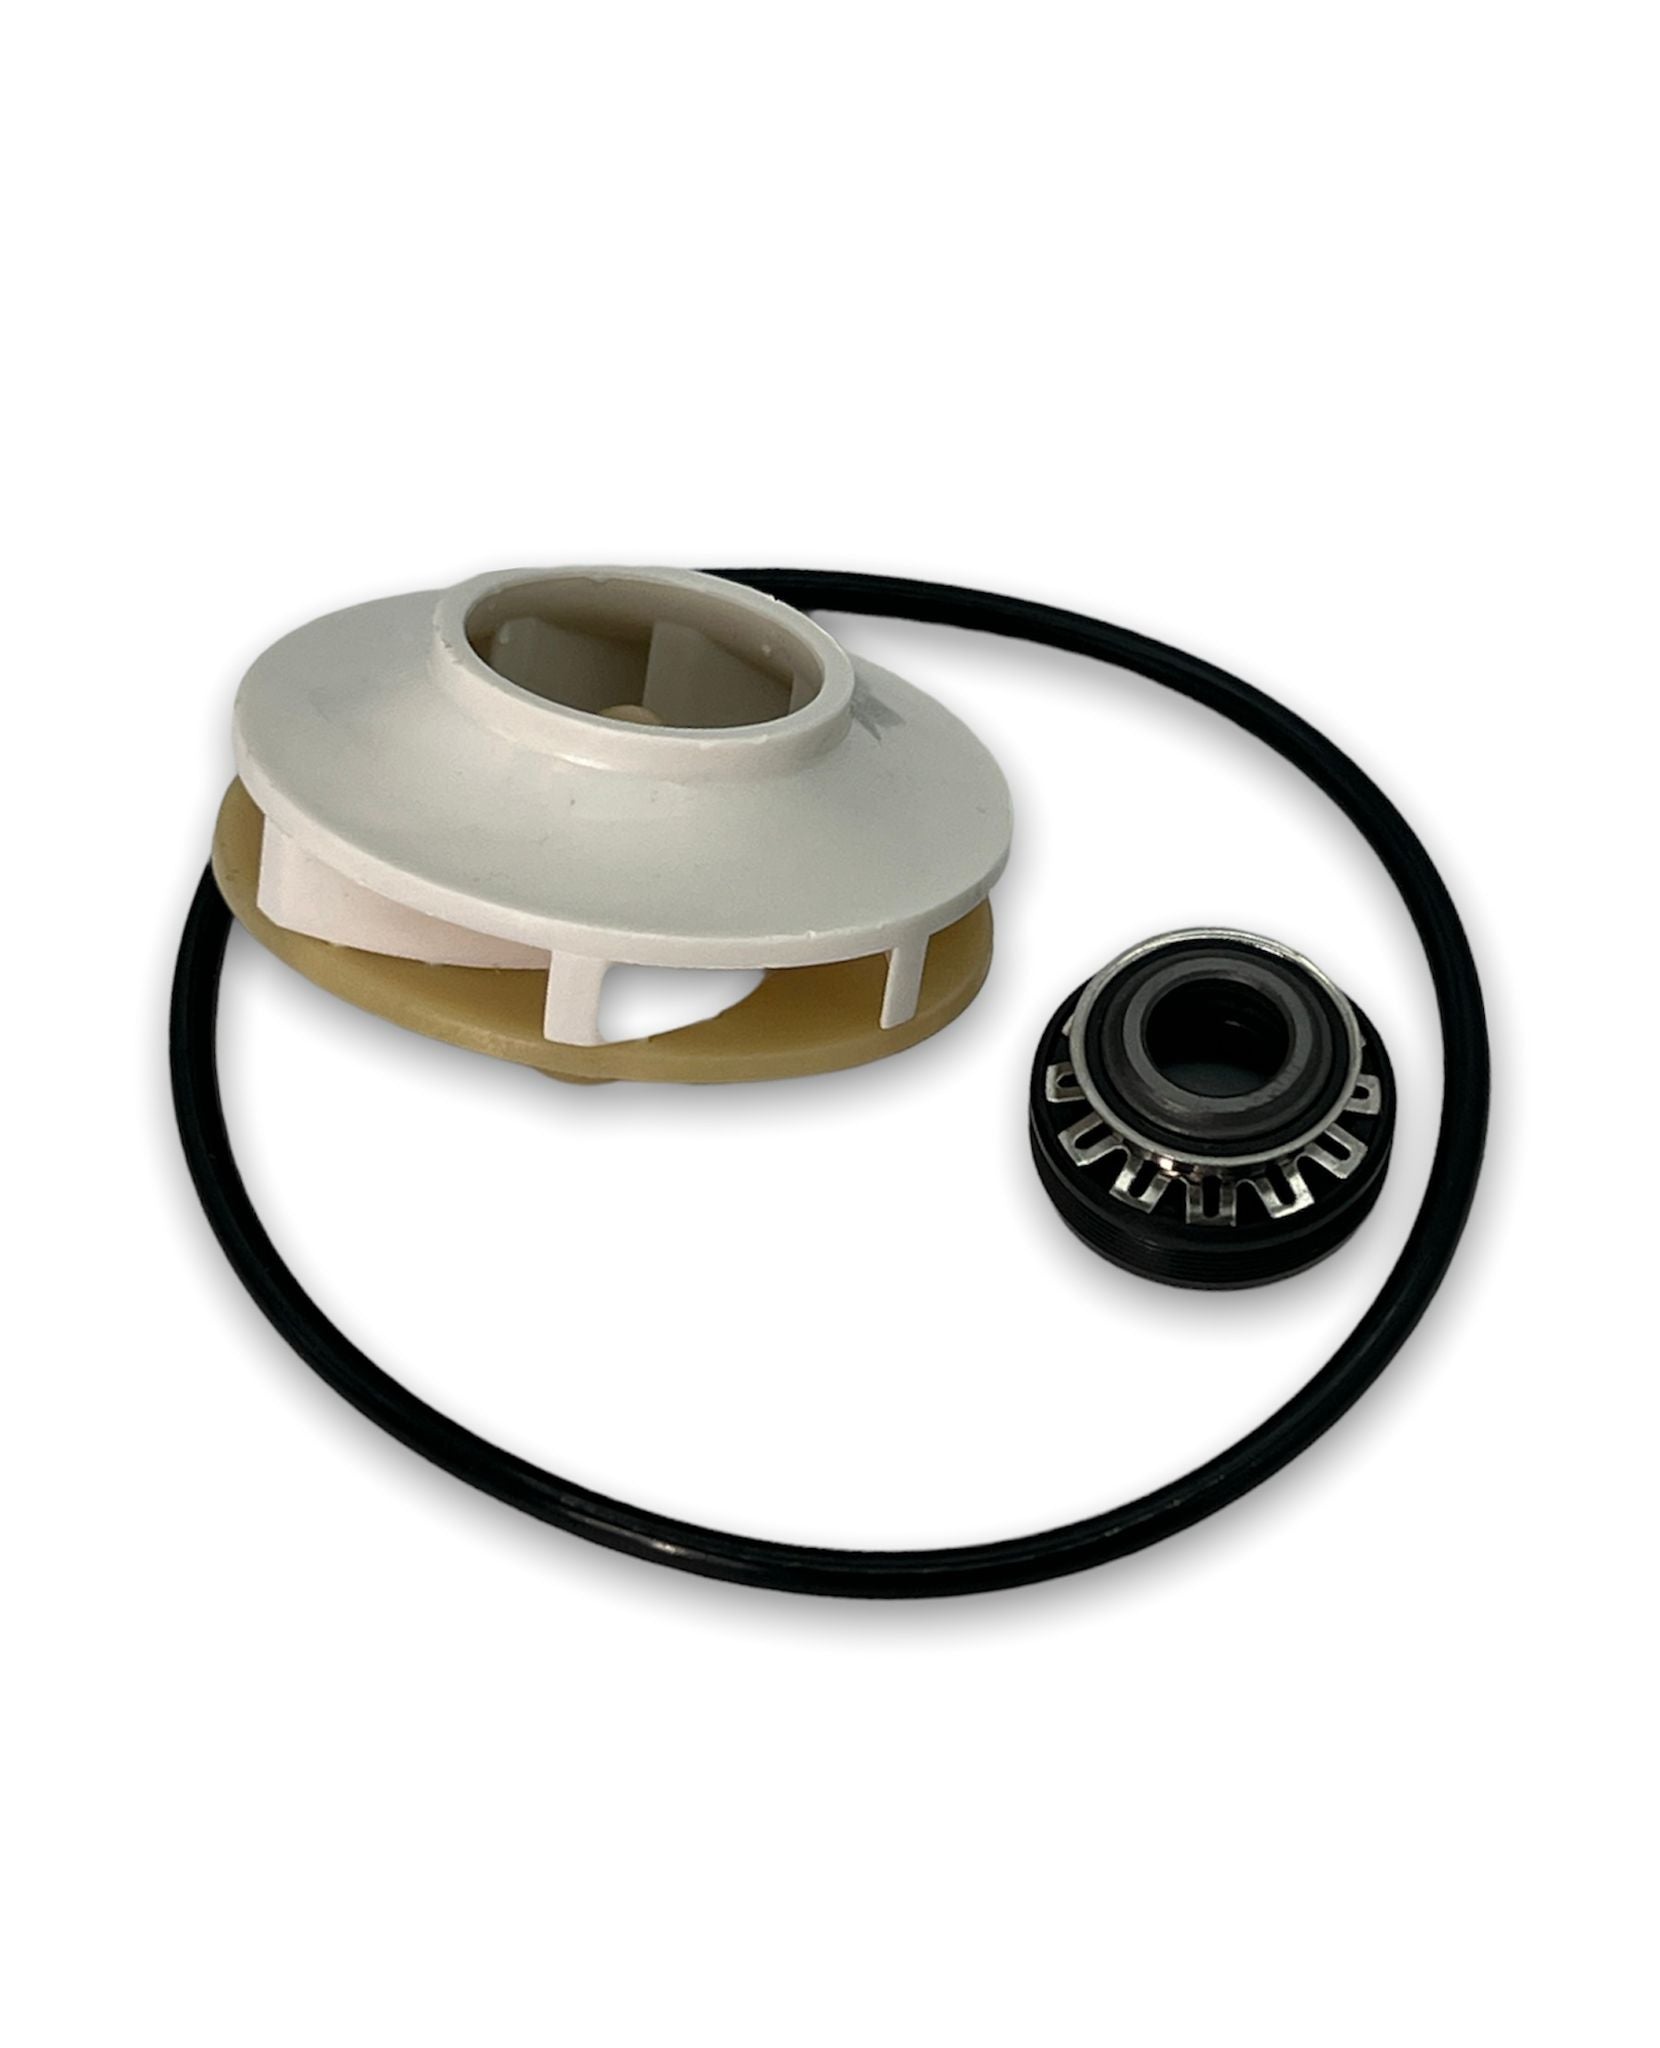 BOSCH Dishwasher Pump Impeller Repair Kit - 00167085. REPLACES: 167085 935404 AH8697212 AP2802376 EA8697212 EAP8697212 PS8697212 PD00000084 INVERTEC